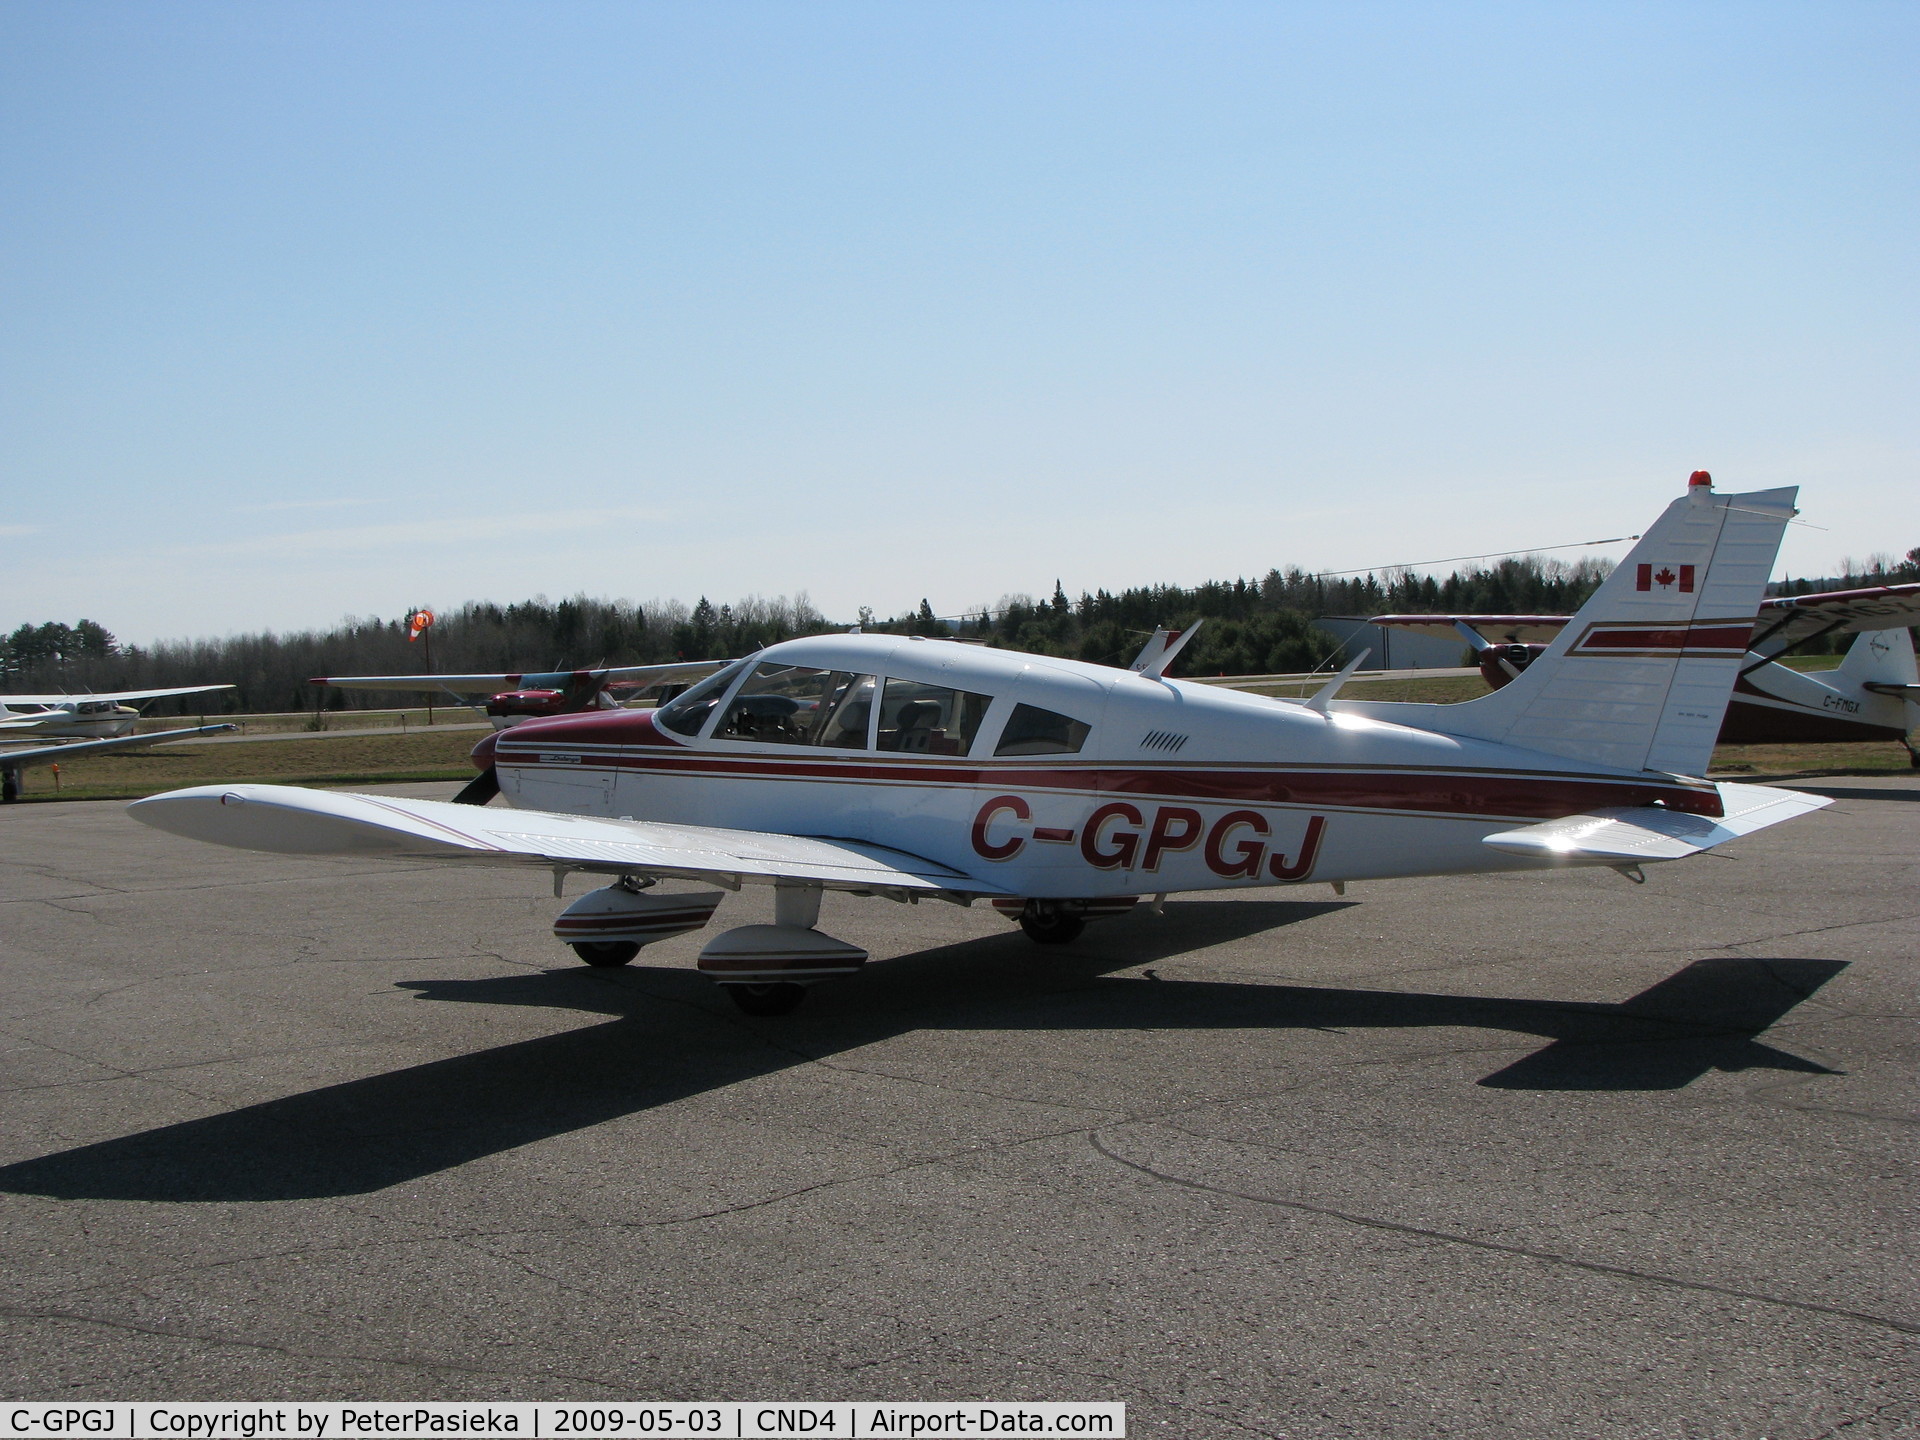 C-GPGJ, 1973 Piper PA-28-180 C/N 28-7305453, @ Haliburton/Stahnope Airport